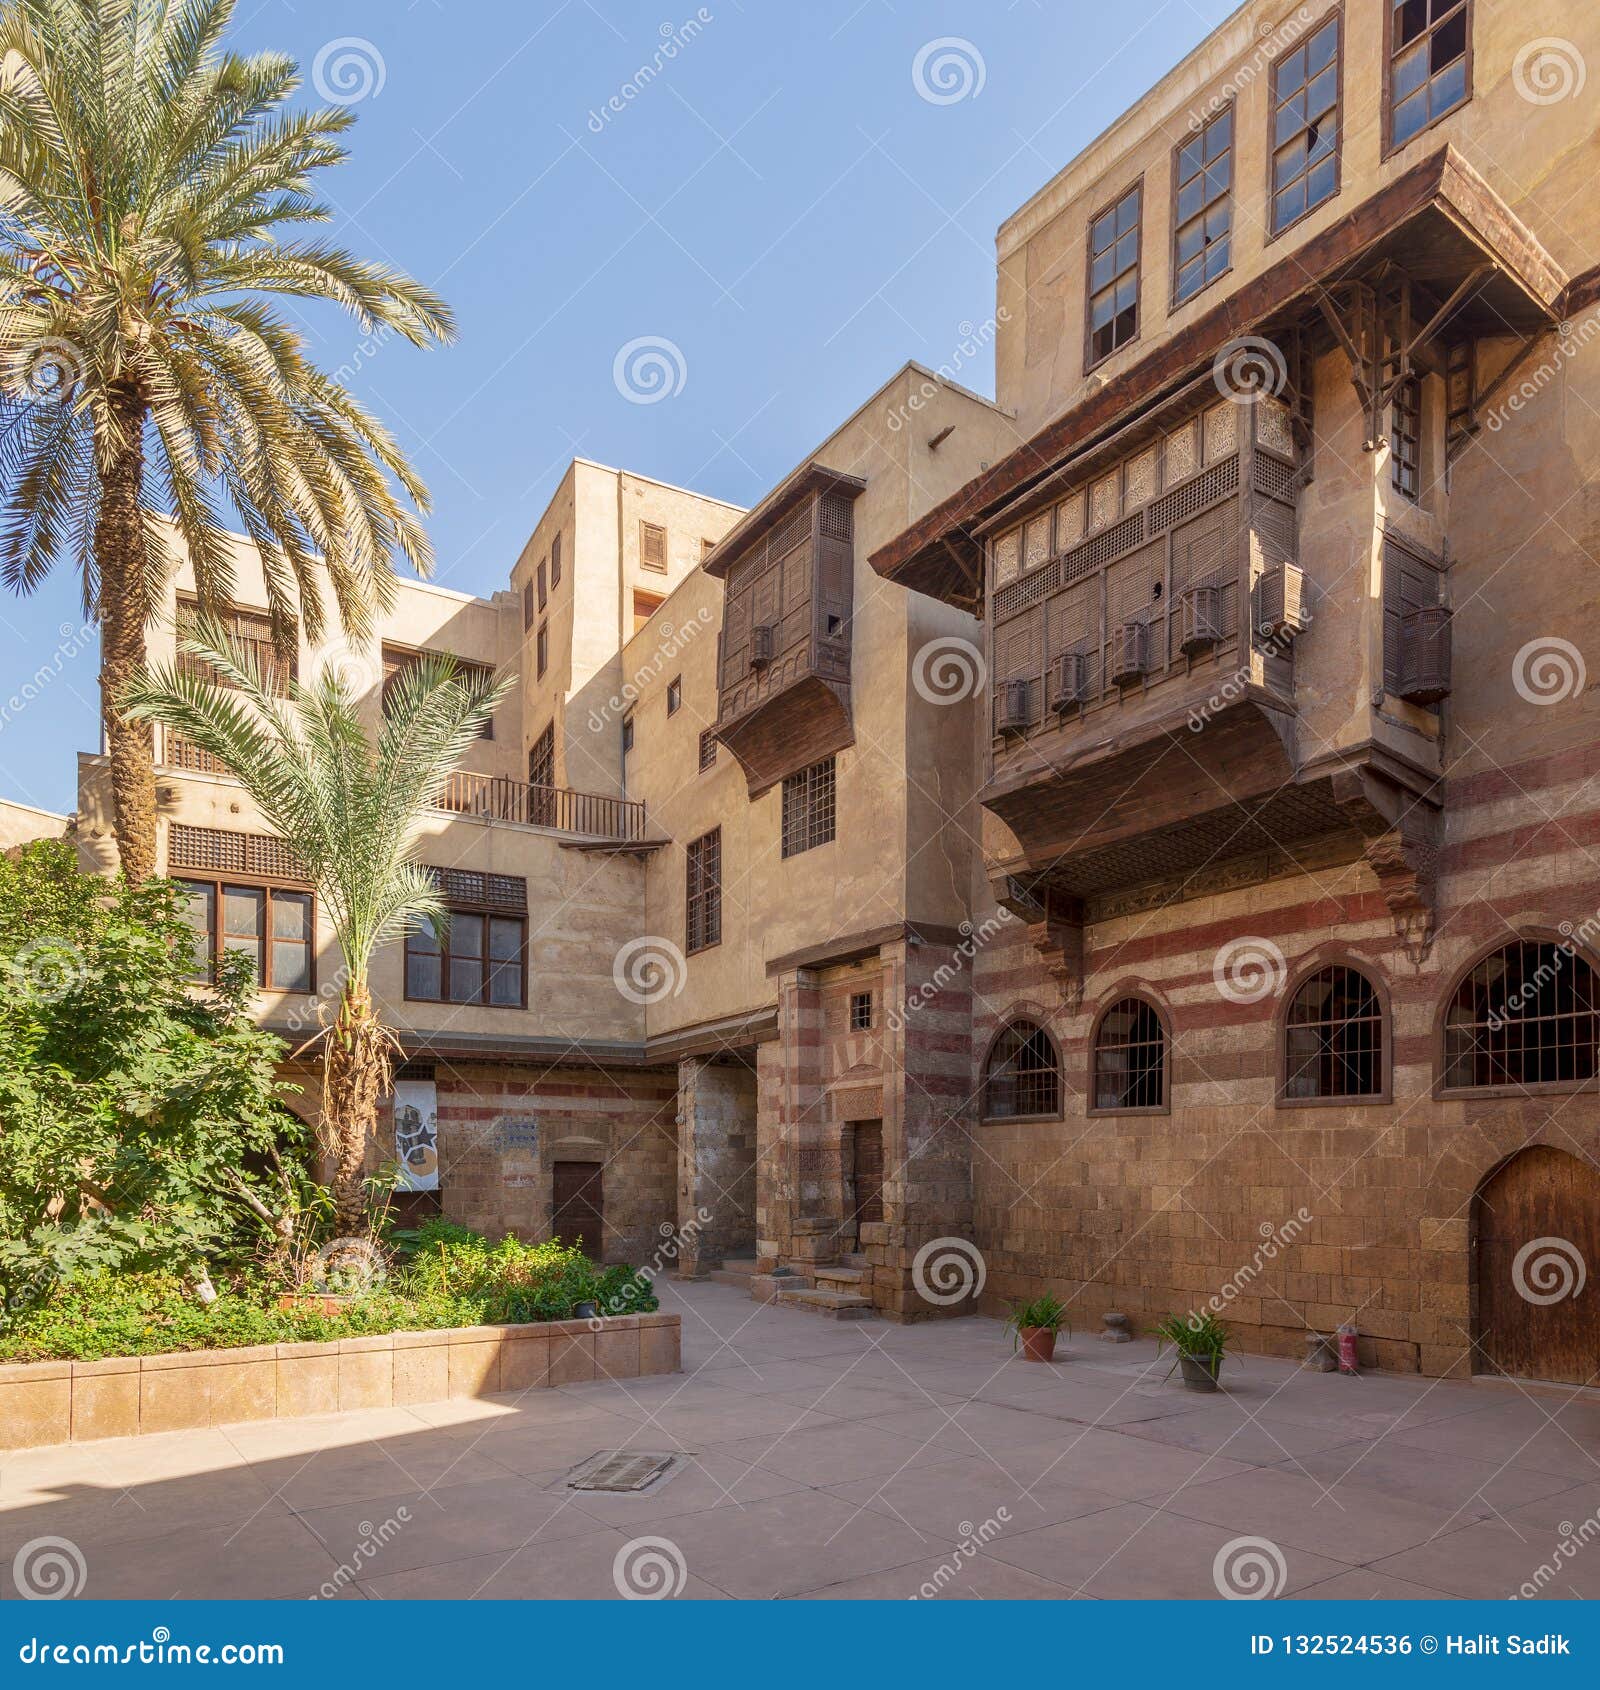 courtyard of el razzaz mamluk era historic house, darb al-ahmar district, old cairo, egypt